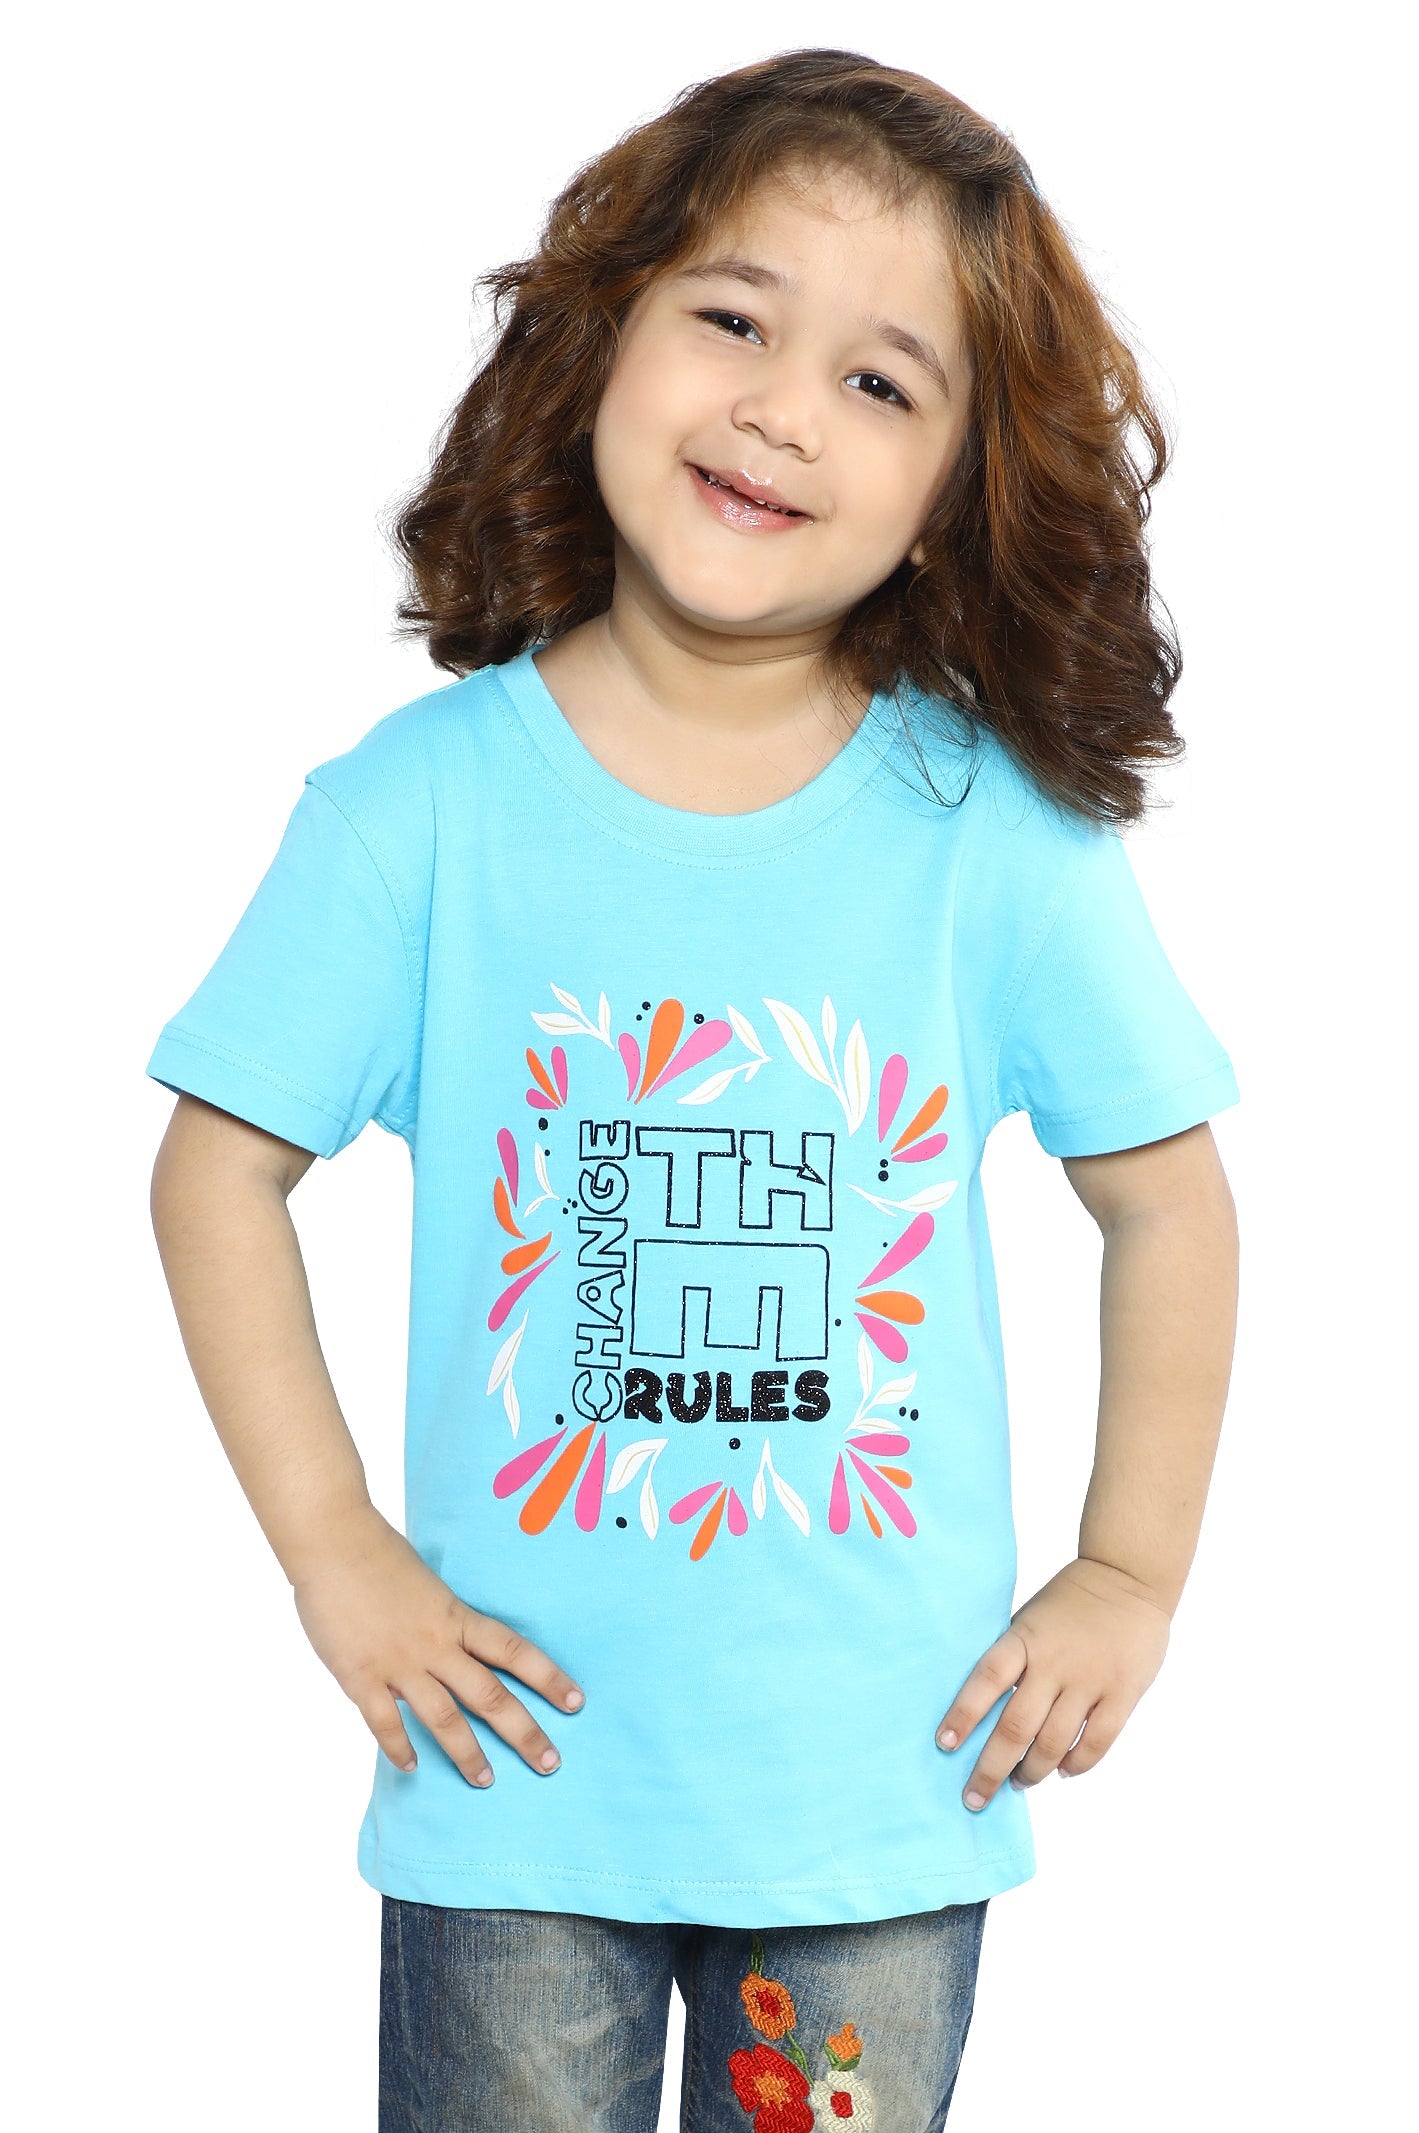 Girls T-Shirt In Aqua SKU: KGA-0254-AQUA - Diners